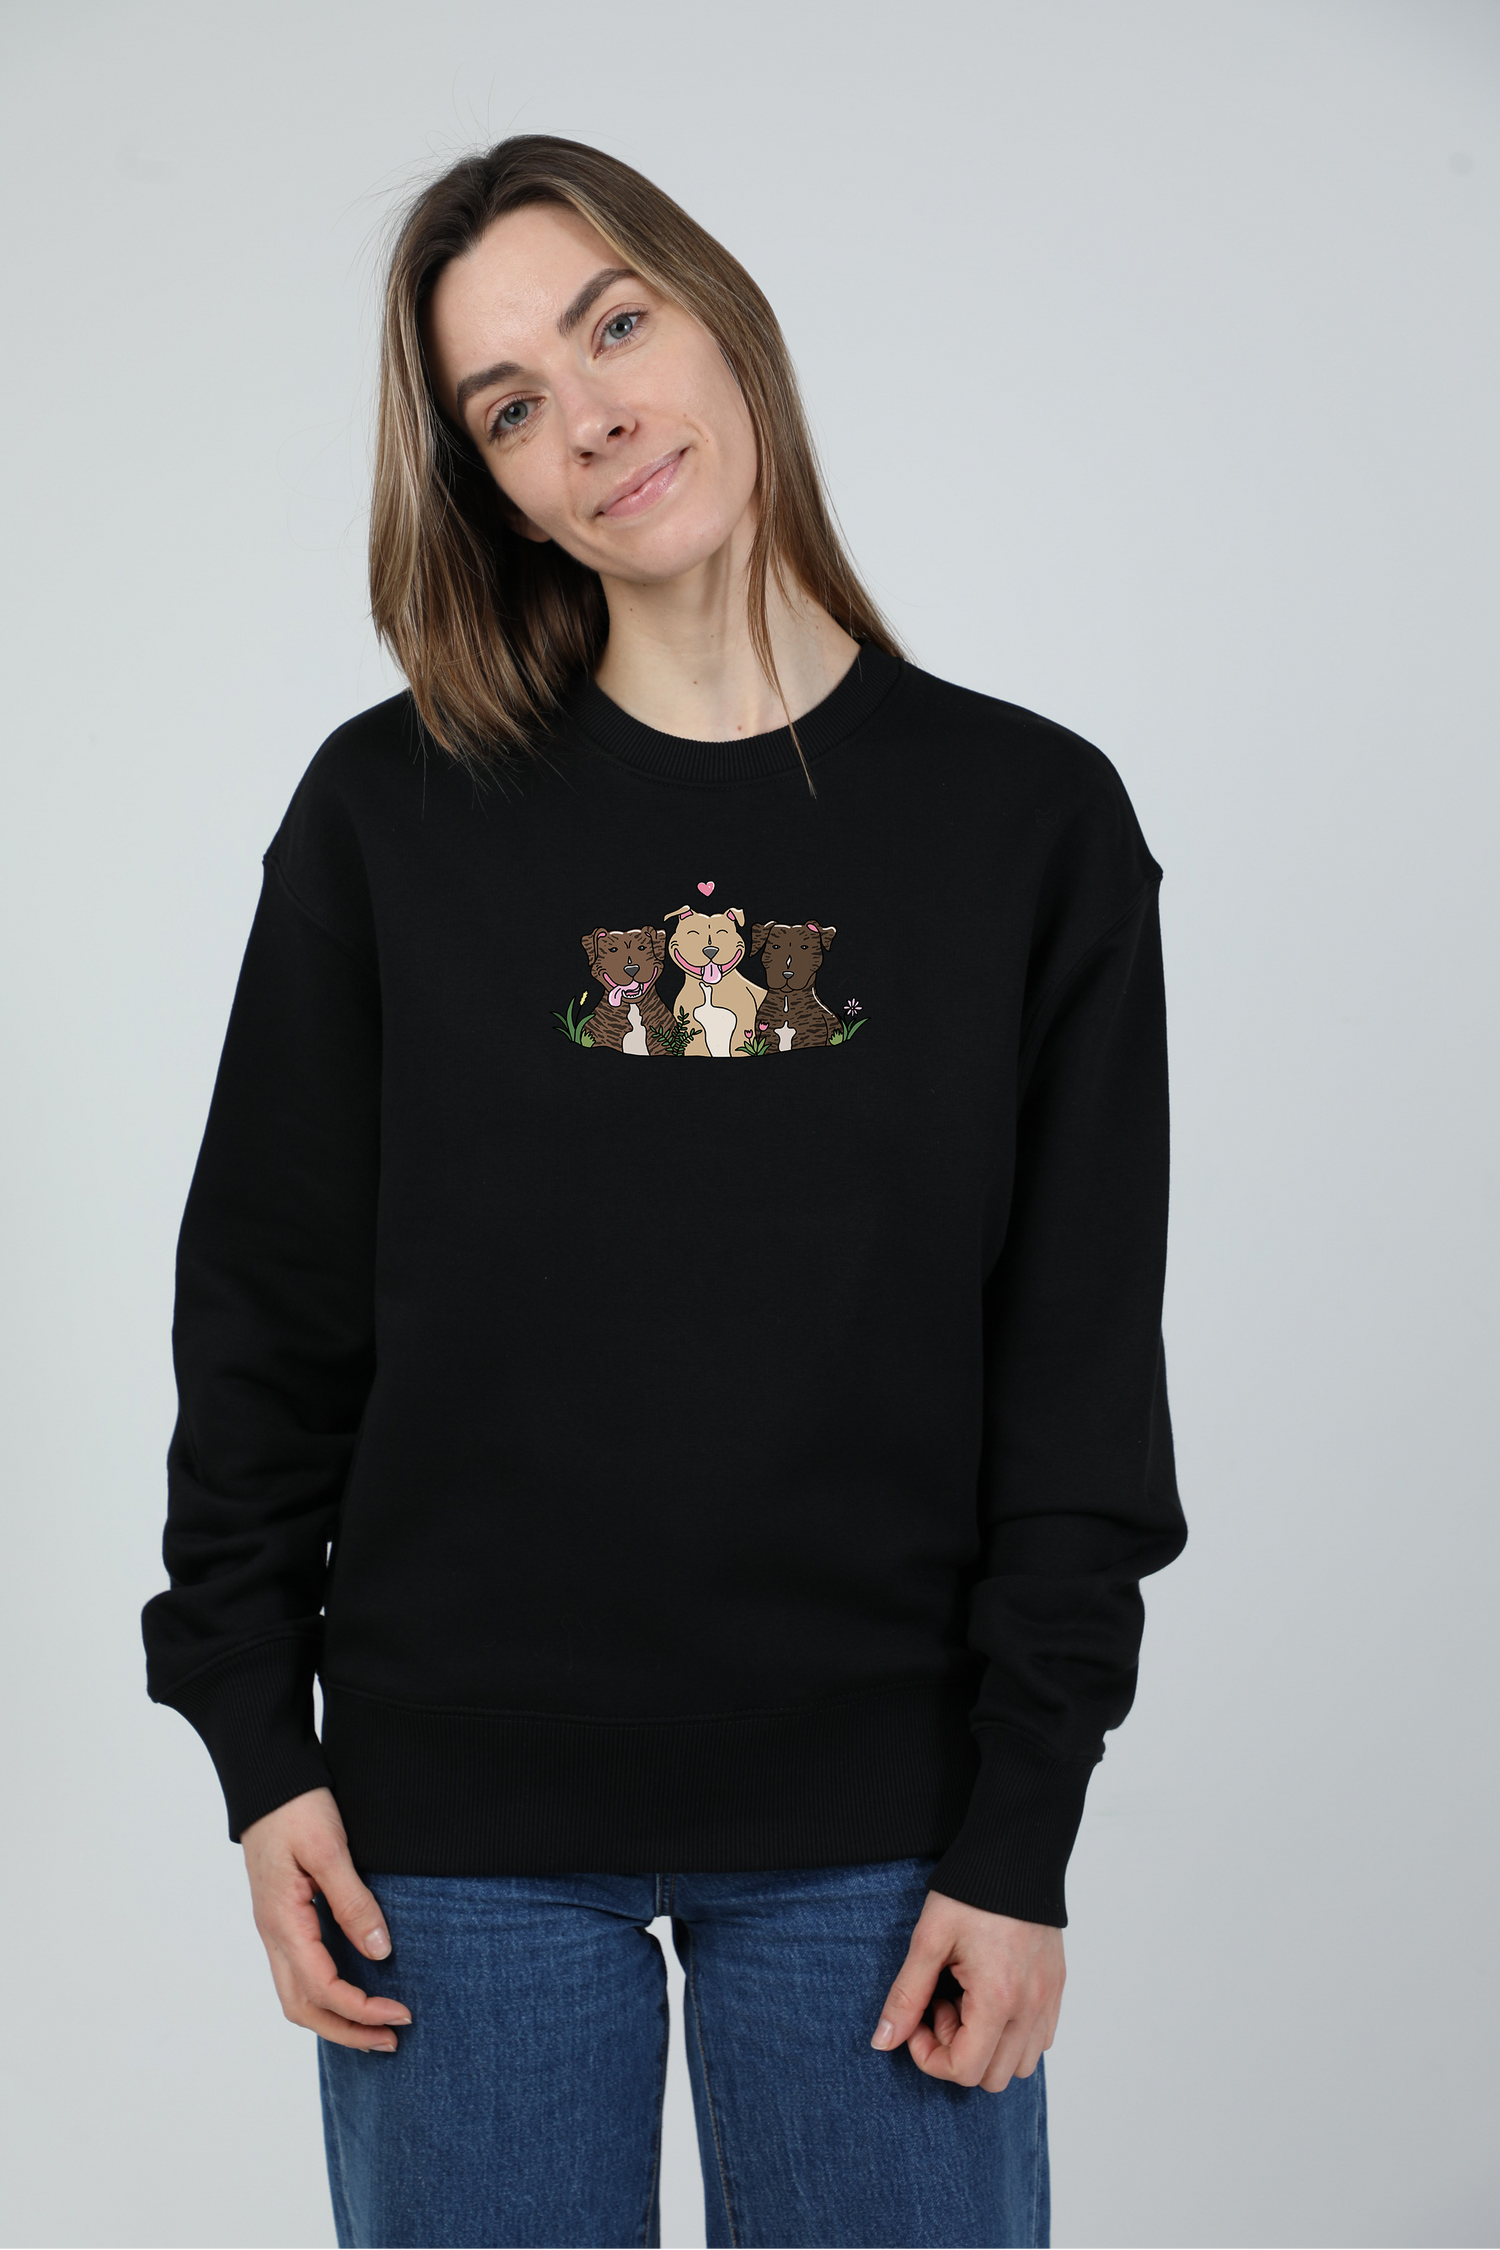 Funky sweatshirts with dog prints